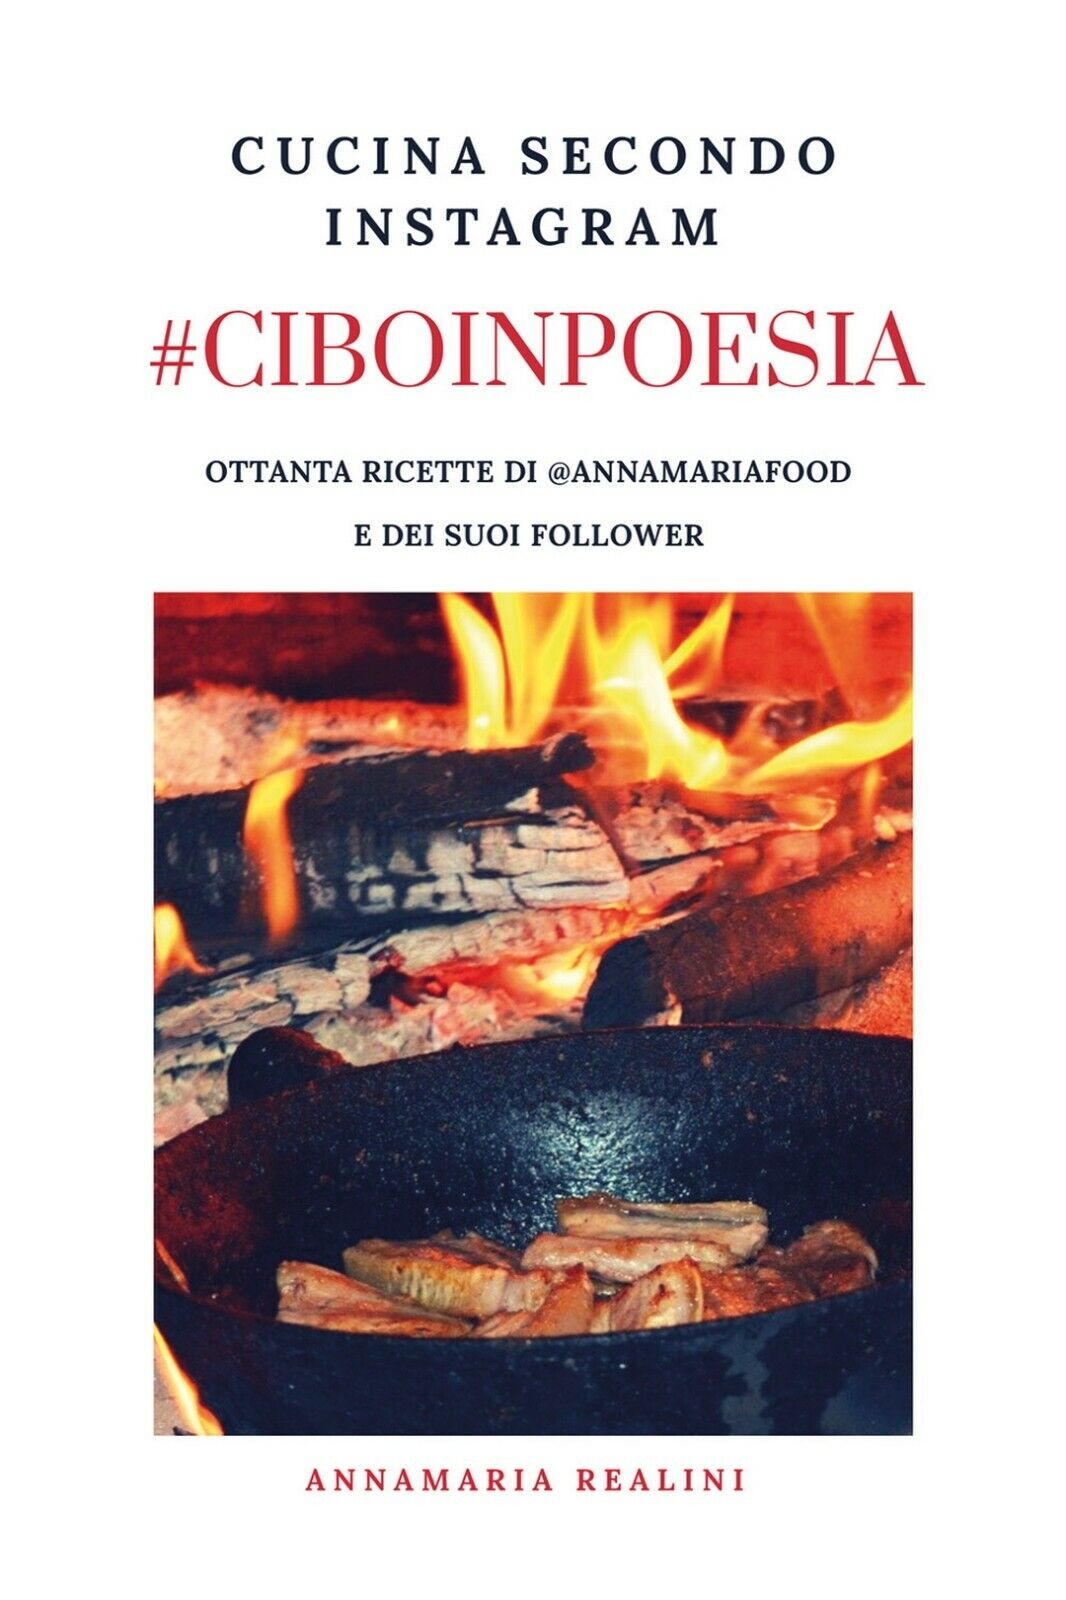 #CIBOINPOESIA Cucina secondo Instagram, Annamaria Realini,  2020,  Youcanprint